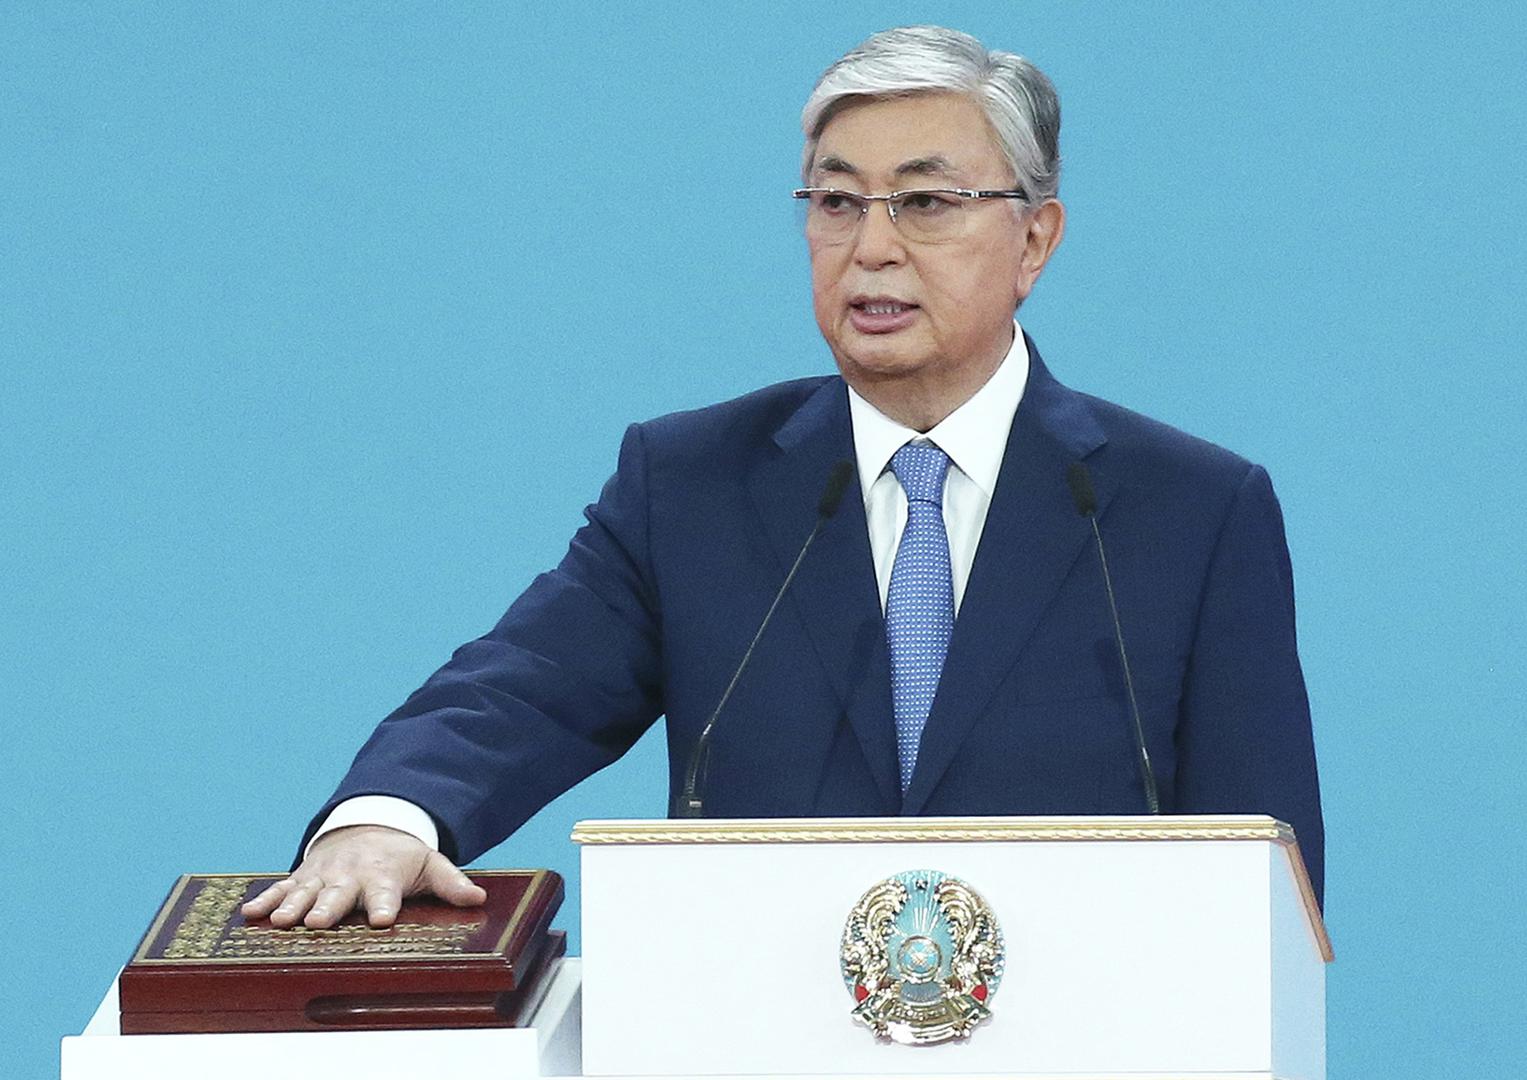 Kazakh President President Kassym-Jomart Tokayev takes the oath during his inauguration ceremony in Nur-Sultan, Kazakhstan.